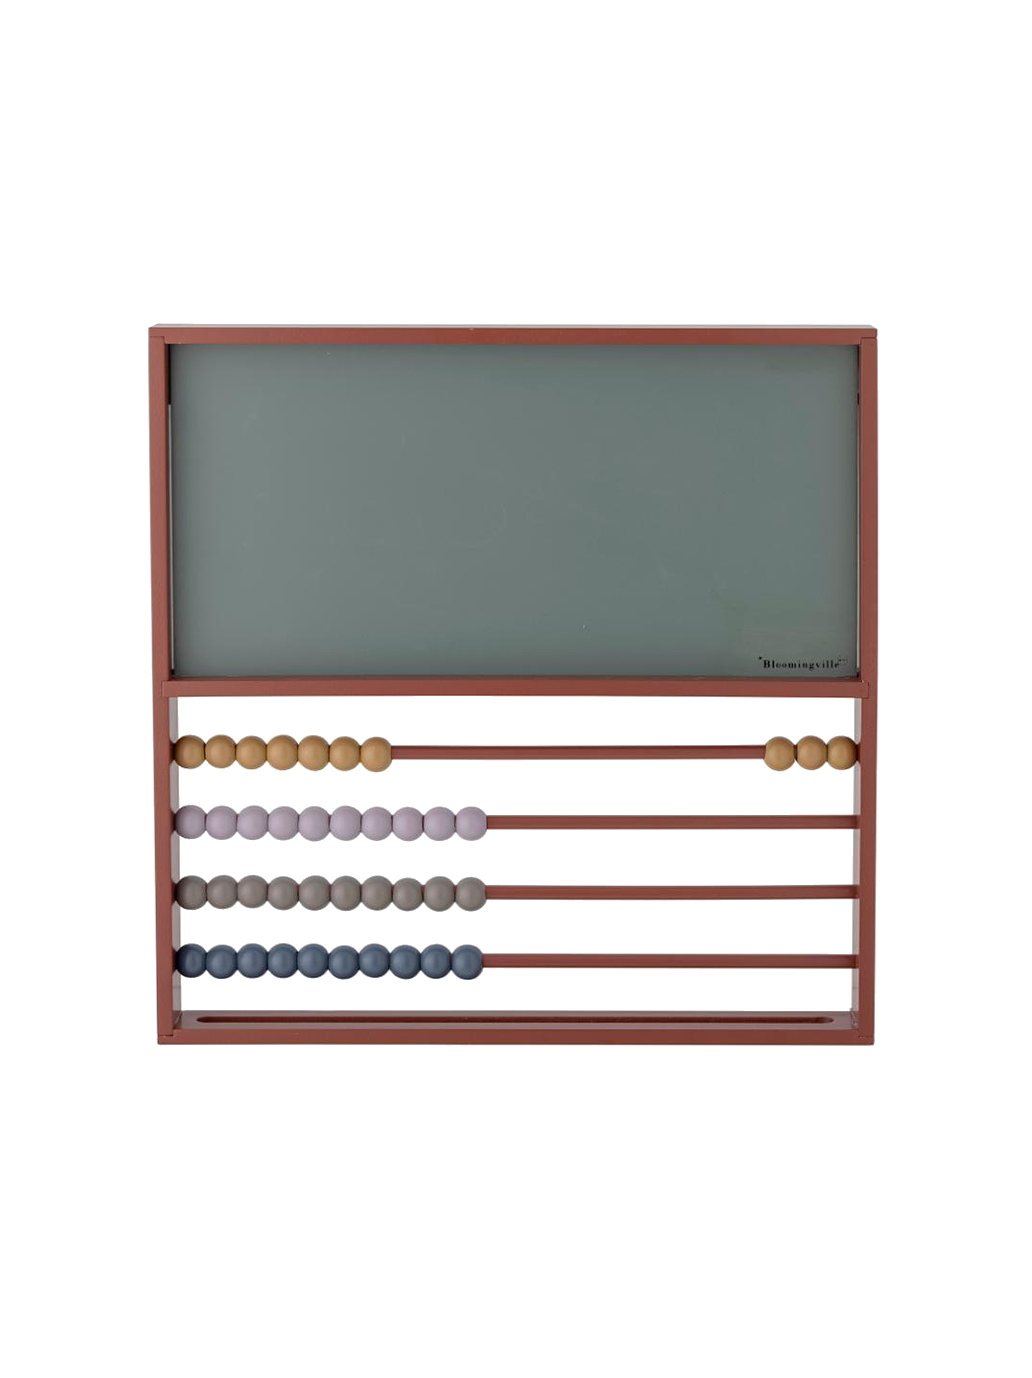 Abacus with blackboard